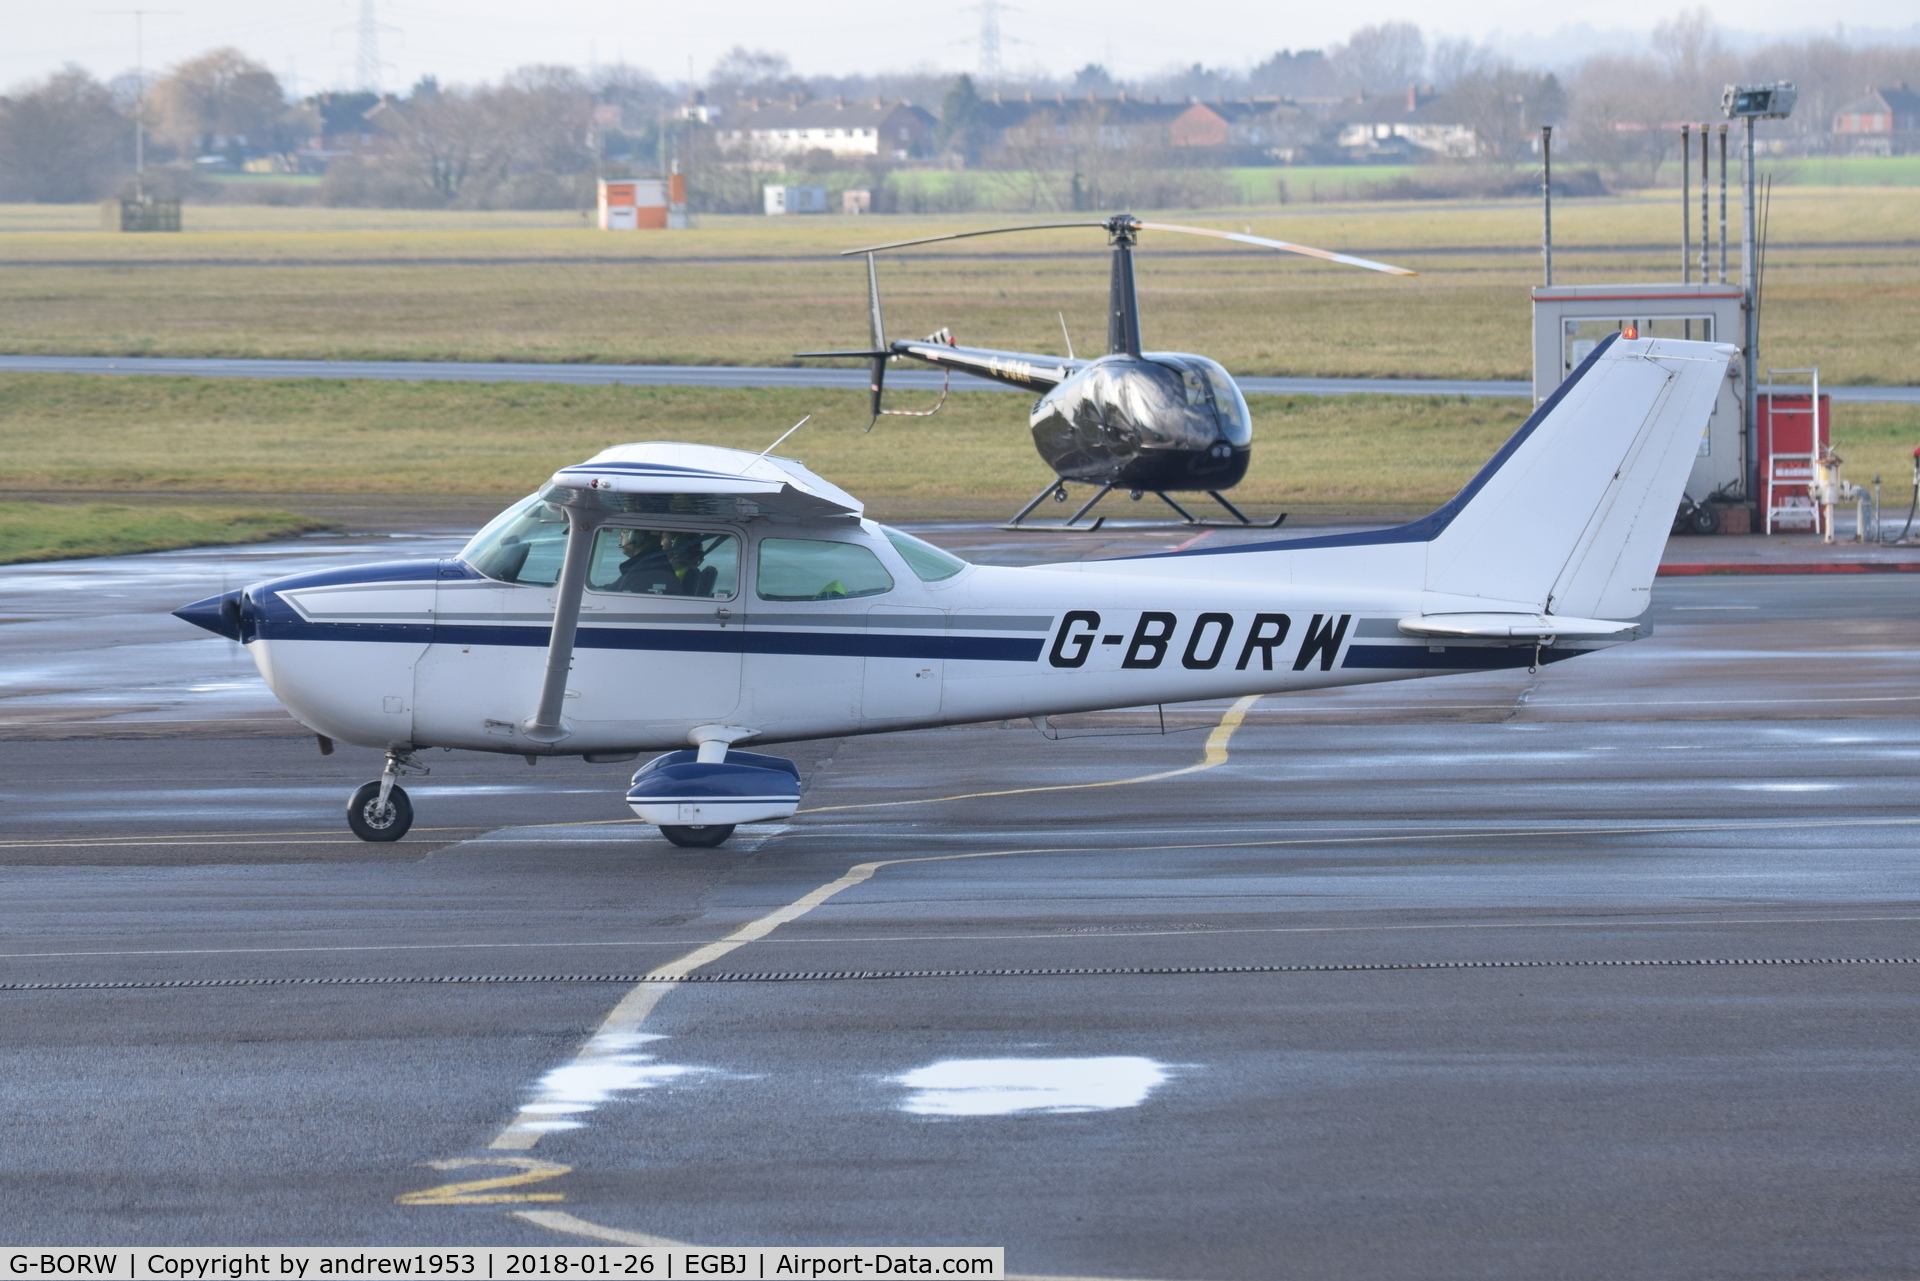 G-BORW, 1981 Cessna 172P C/N 172-74301, G-BORW at Gloucestershire Airport.